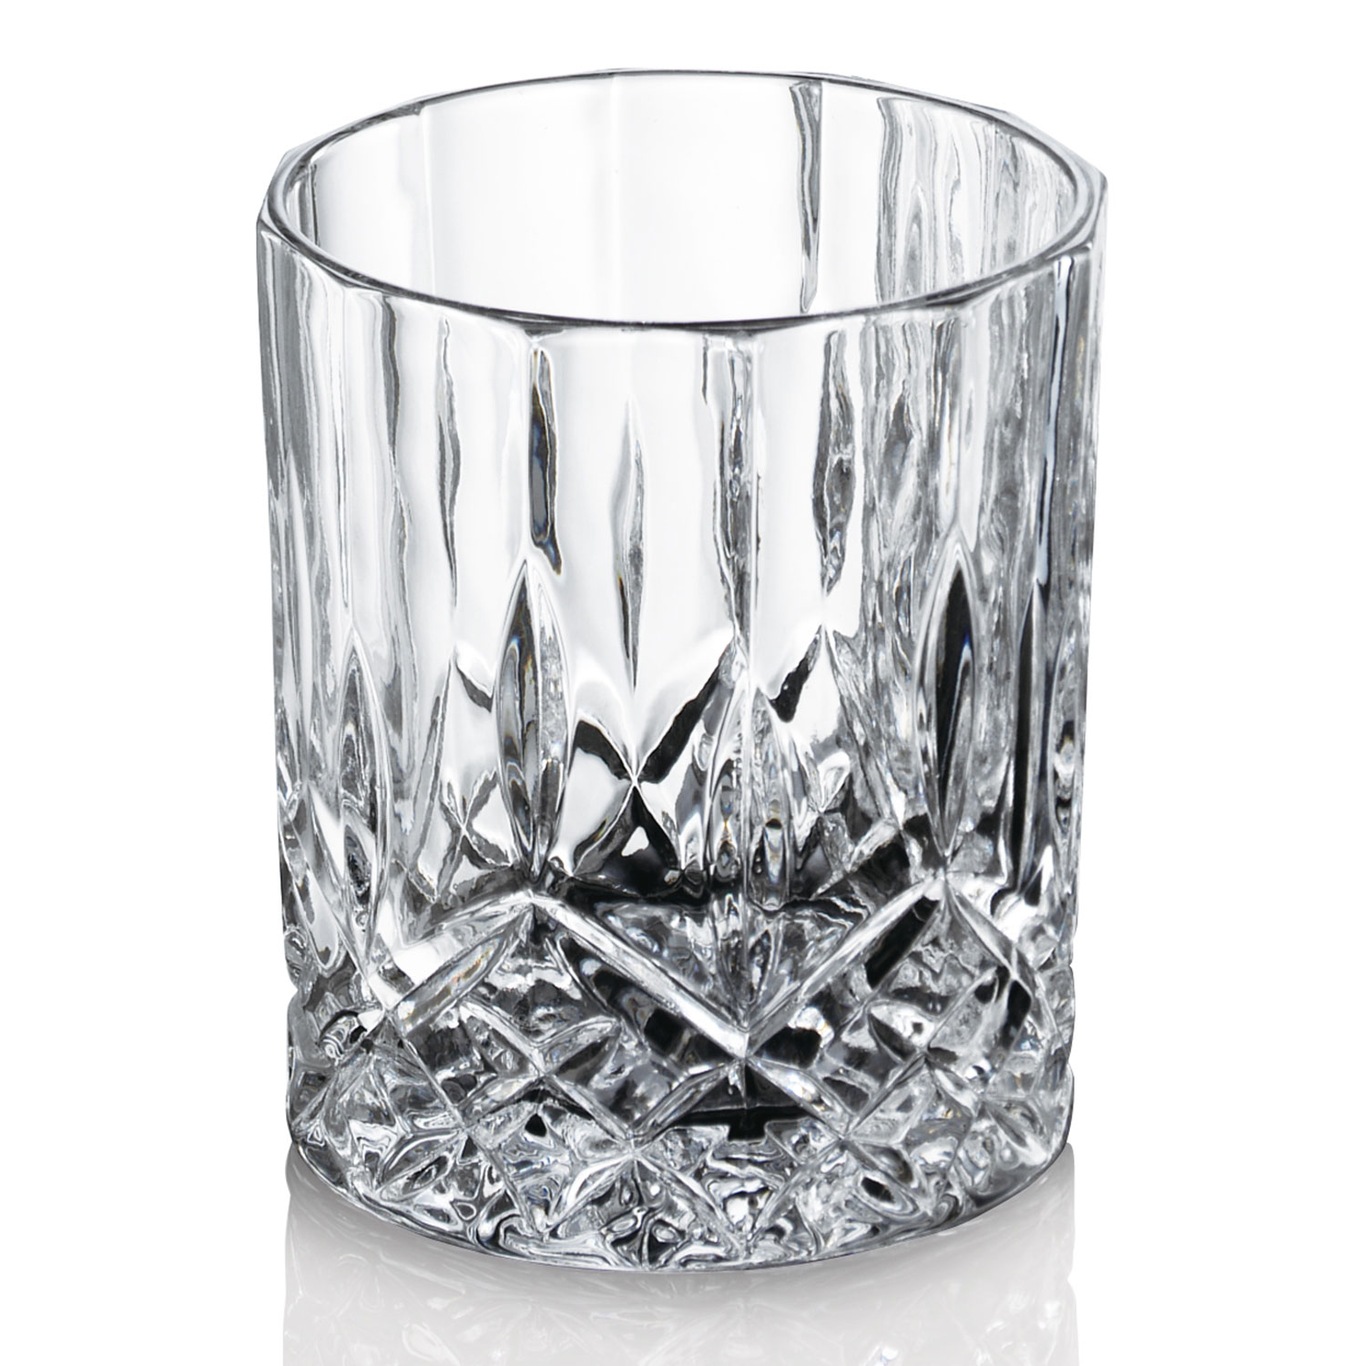 Harvey Whiskyglas 31 cl 4 stk, Doorzichtig